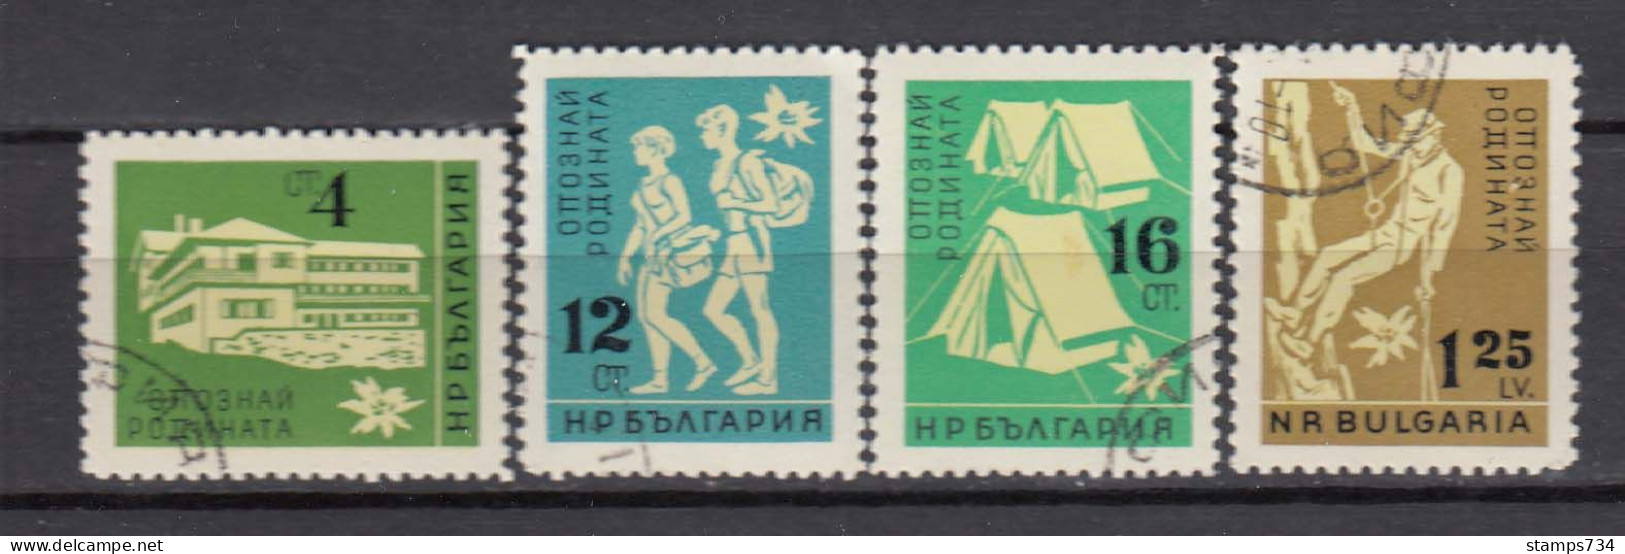 Bulgaria 1961 - Tourism, Mi-Nr. 1250/53, Used - Used Stamps